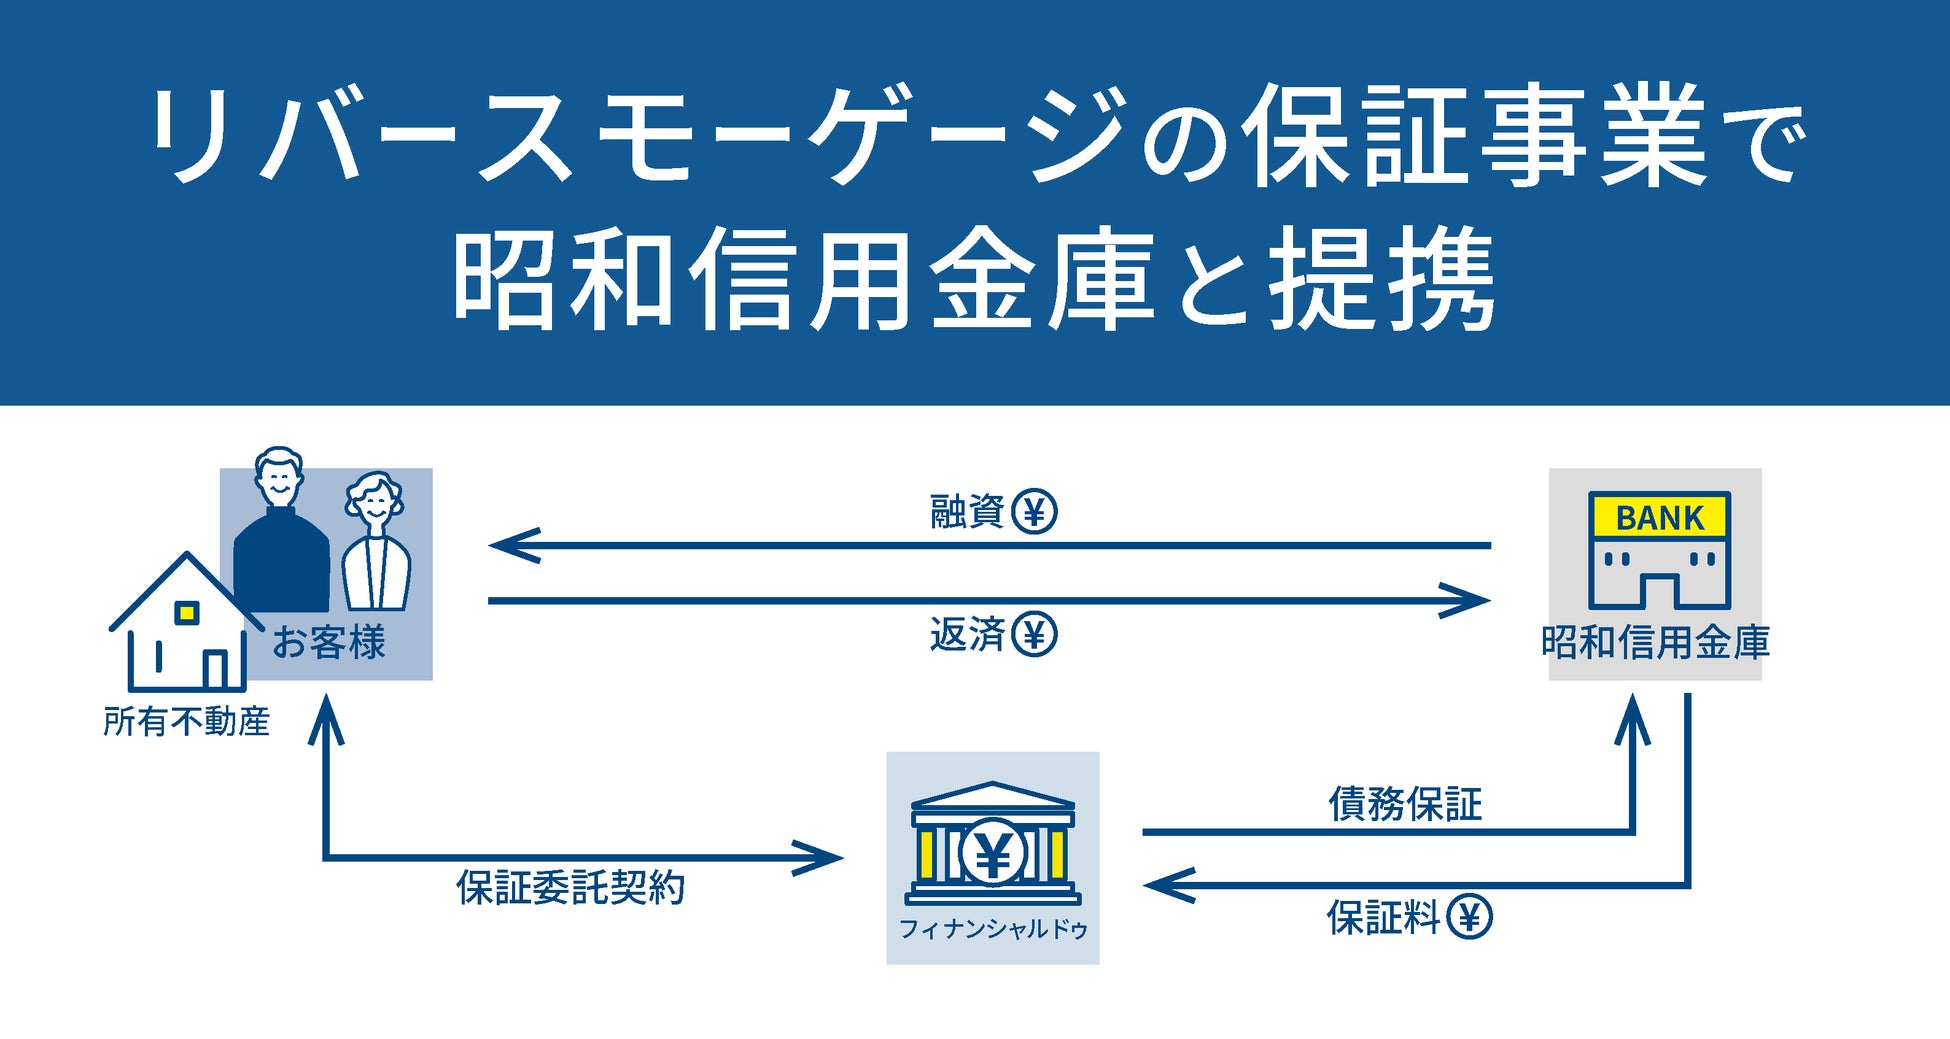 NTT・TCリースと東京センチュリーによる富山市公設地方卸売市場再整備事業の新市場施設を対象とした建物リースの実施について